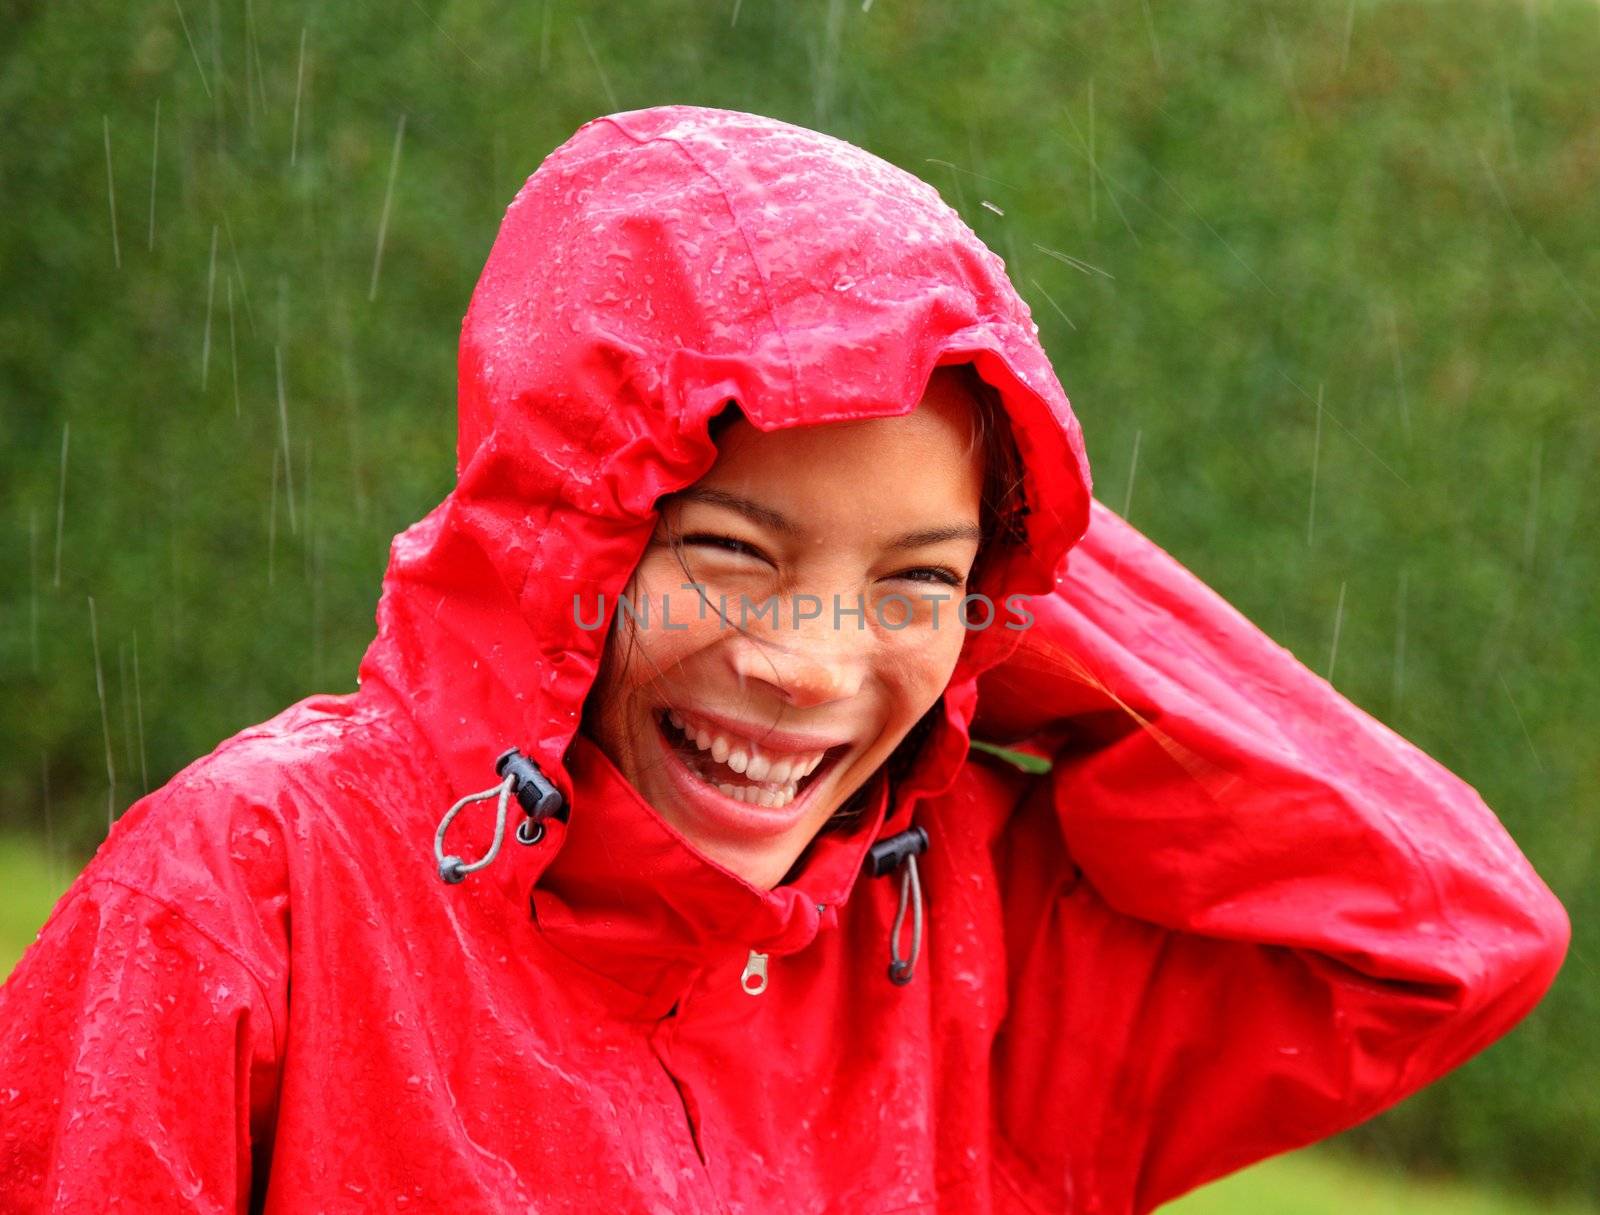 Rain woman. Beautiful young woman in red rain coat laughing having fun outside while it is raining heavily.